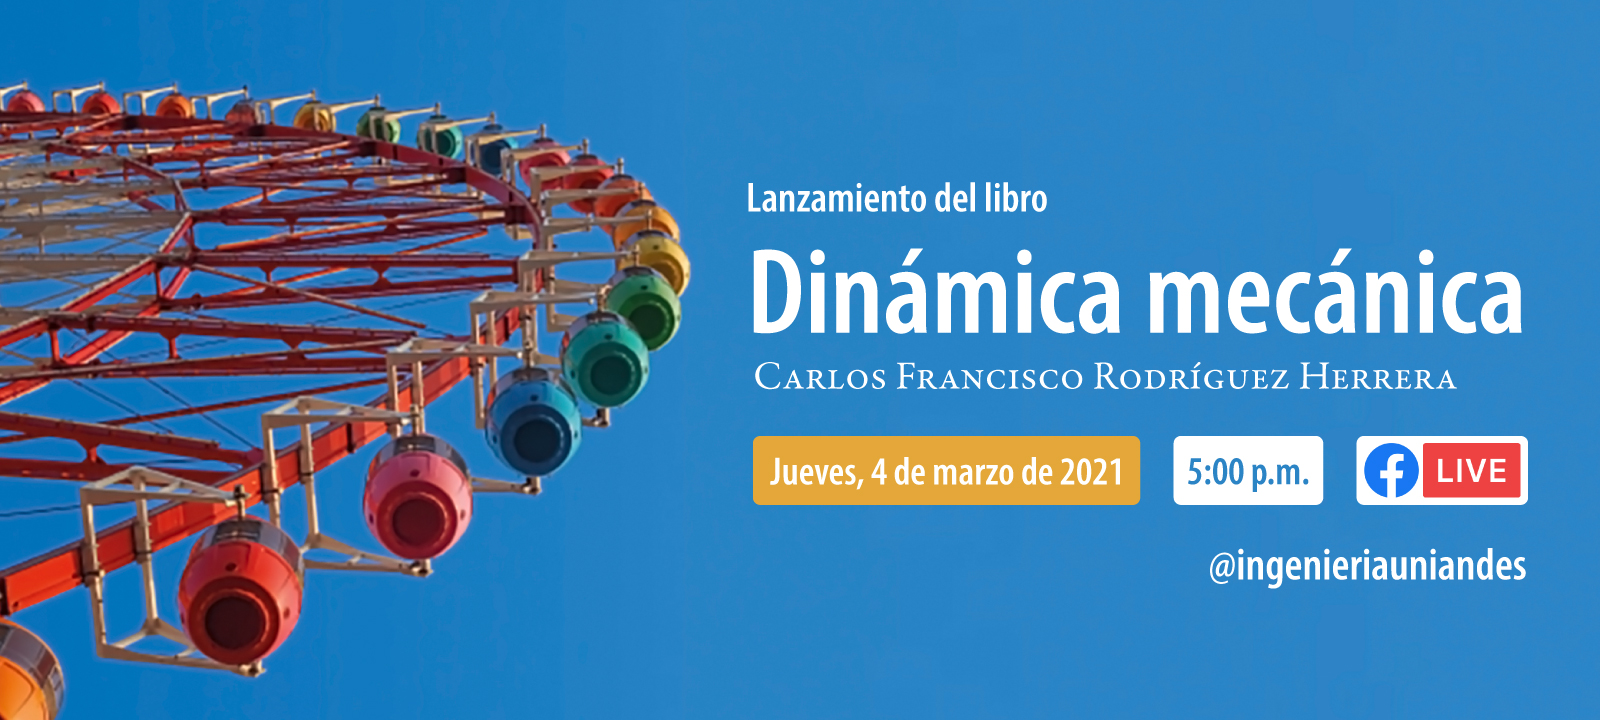 Libro 'Dinámica mecánica' de Carlos Francisco Rodríguez